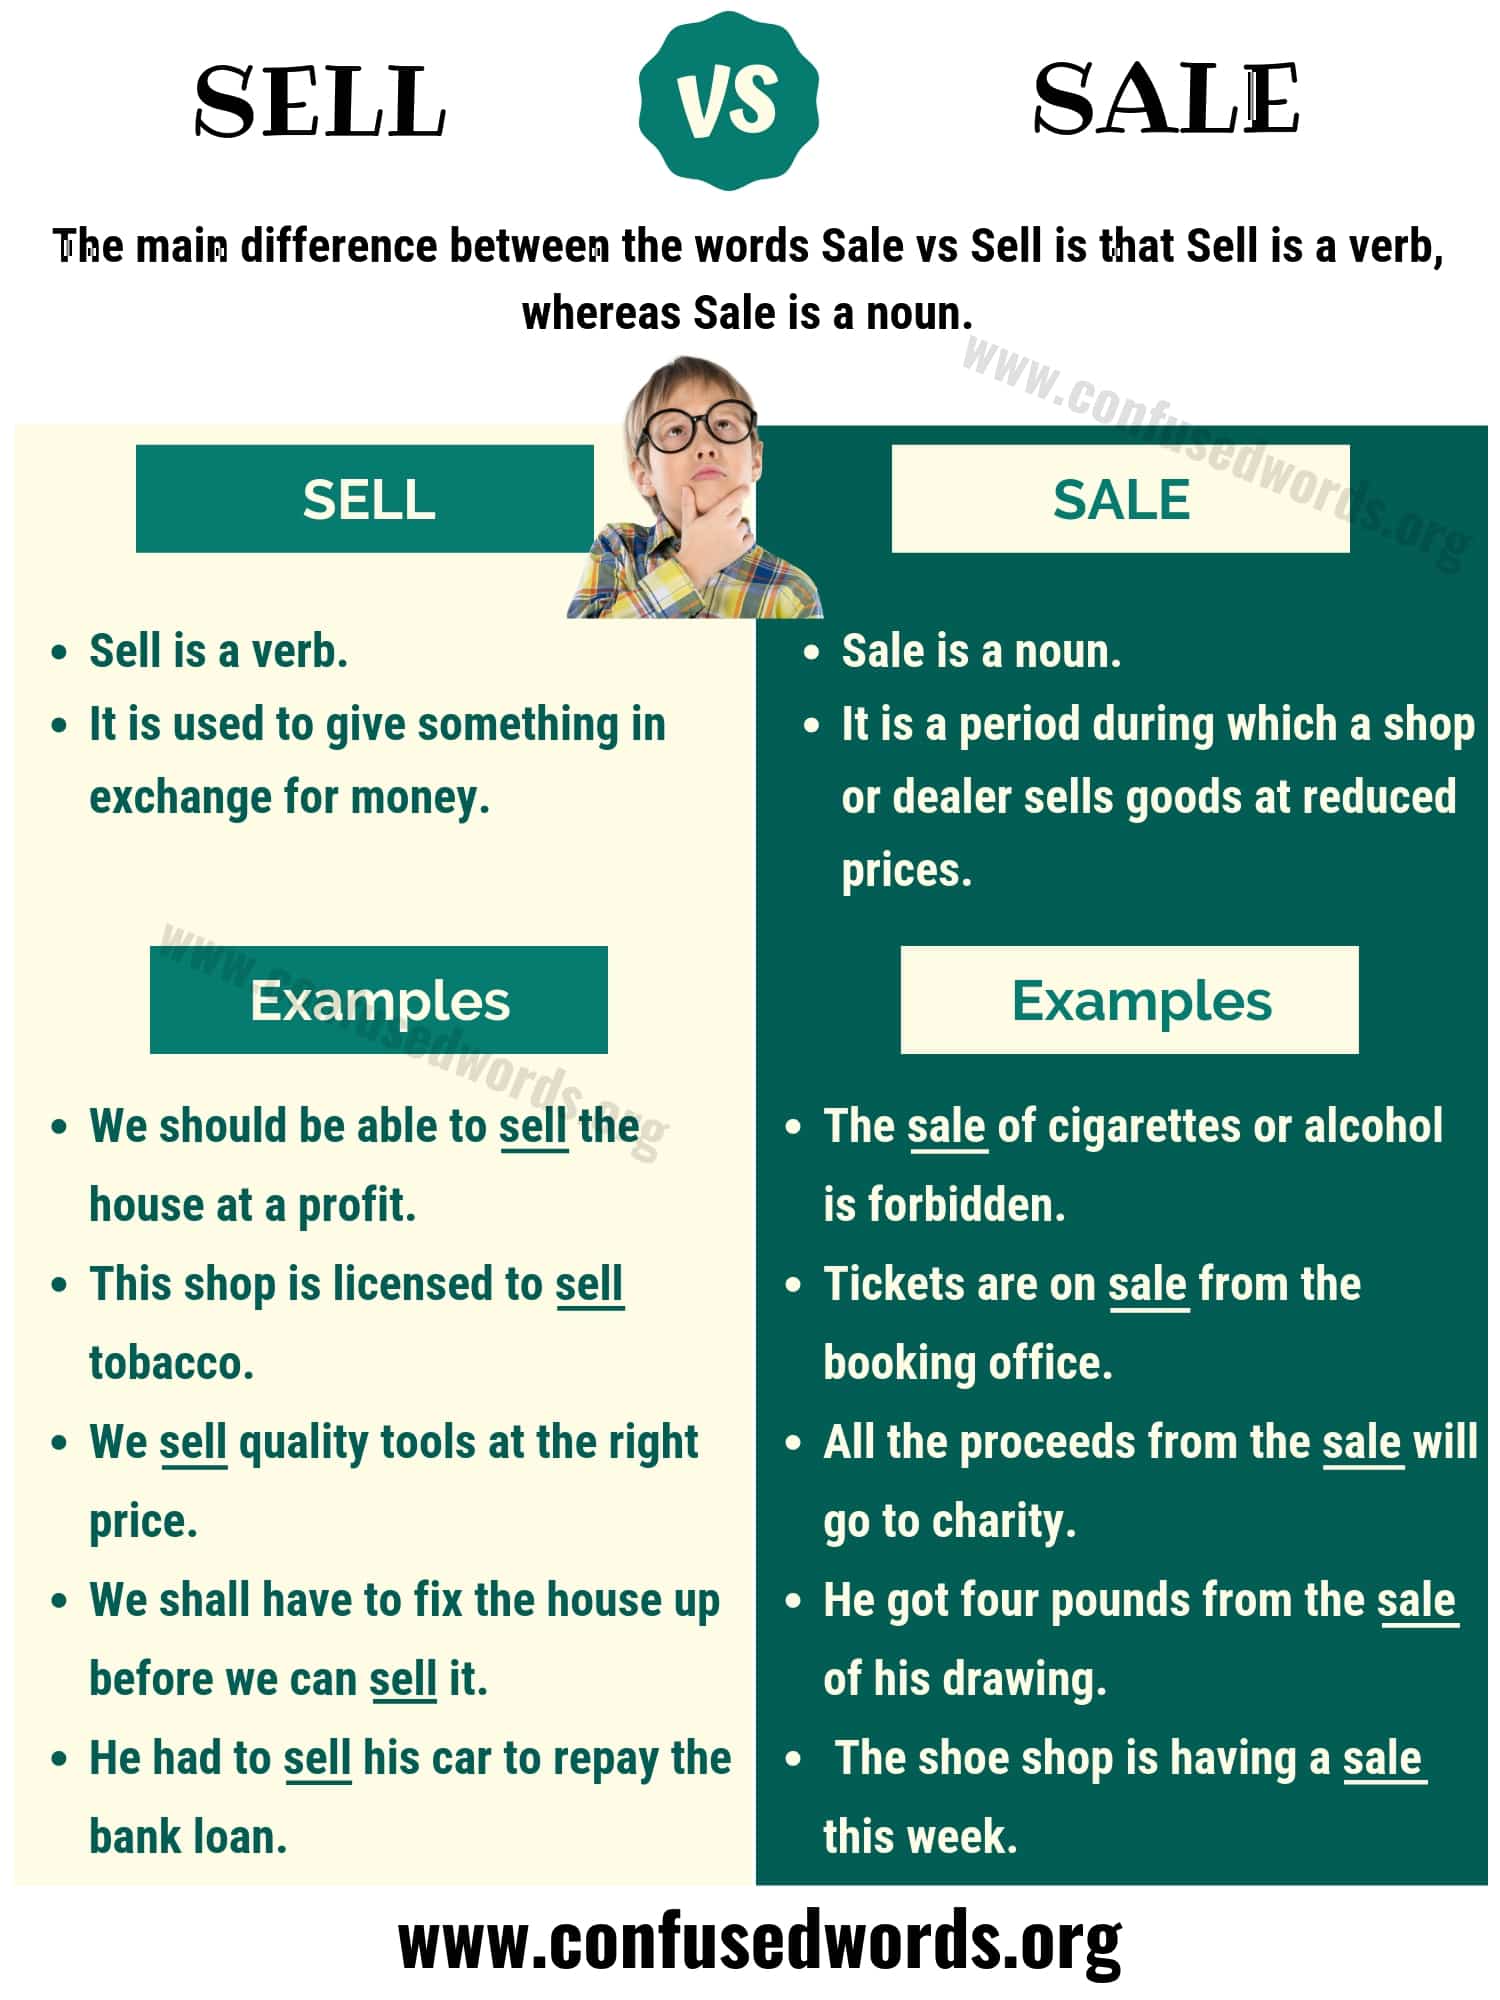 Sell vs Sale